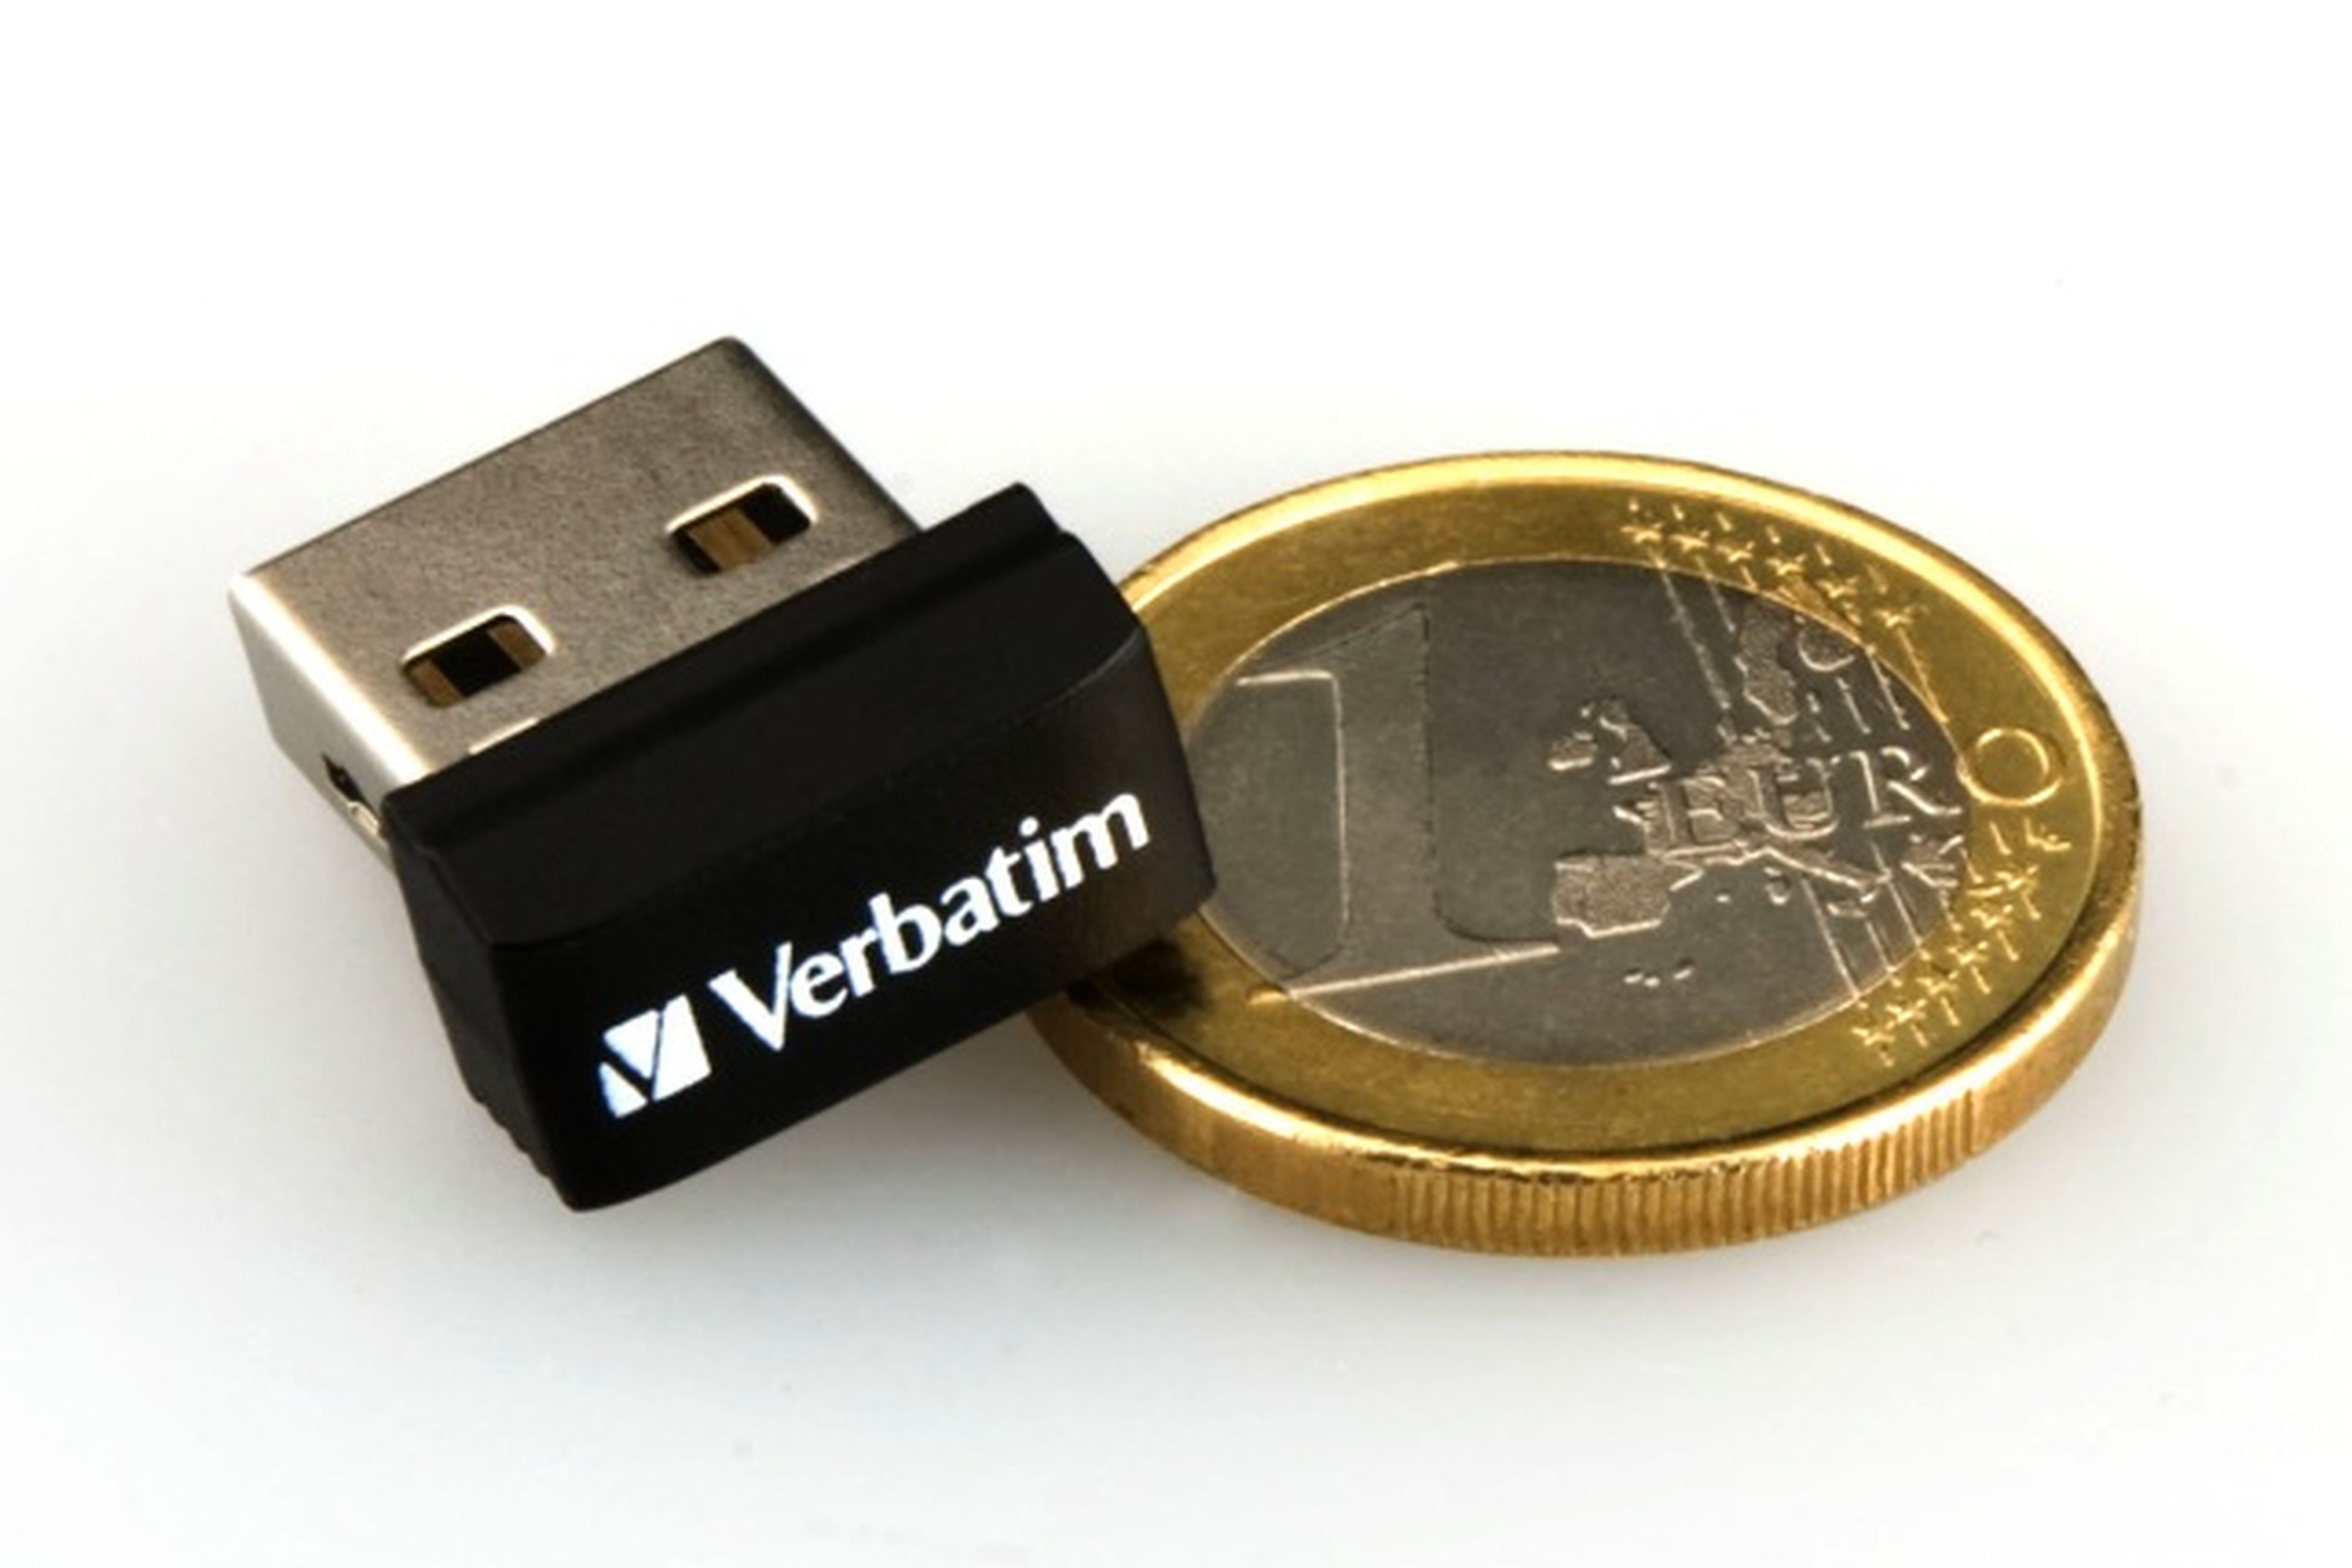 Verbatim USB Netbook